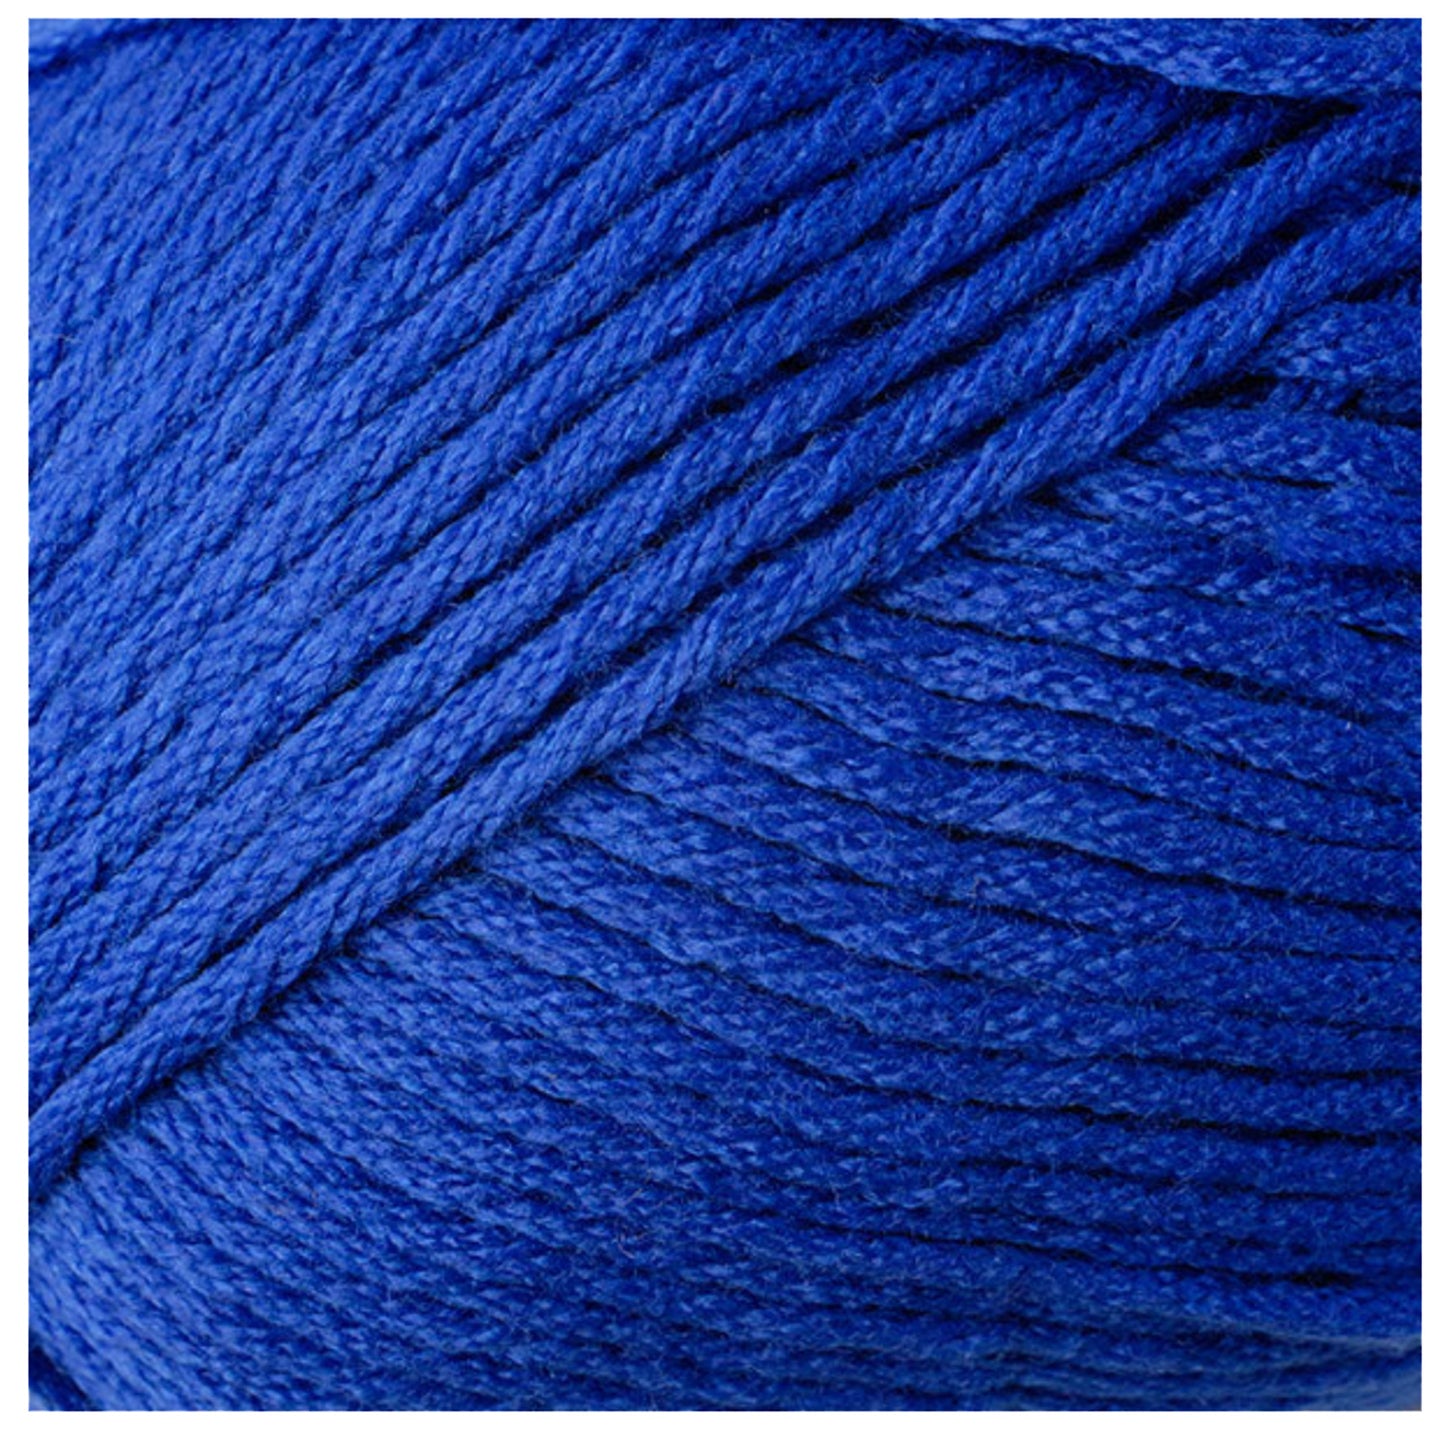 Colorful Crochet Skirt/Cowl - L/1X/2X/3X/4X - All Blues Crochet Kit Alternative View #2